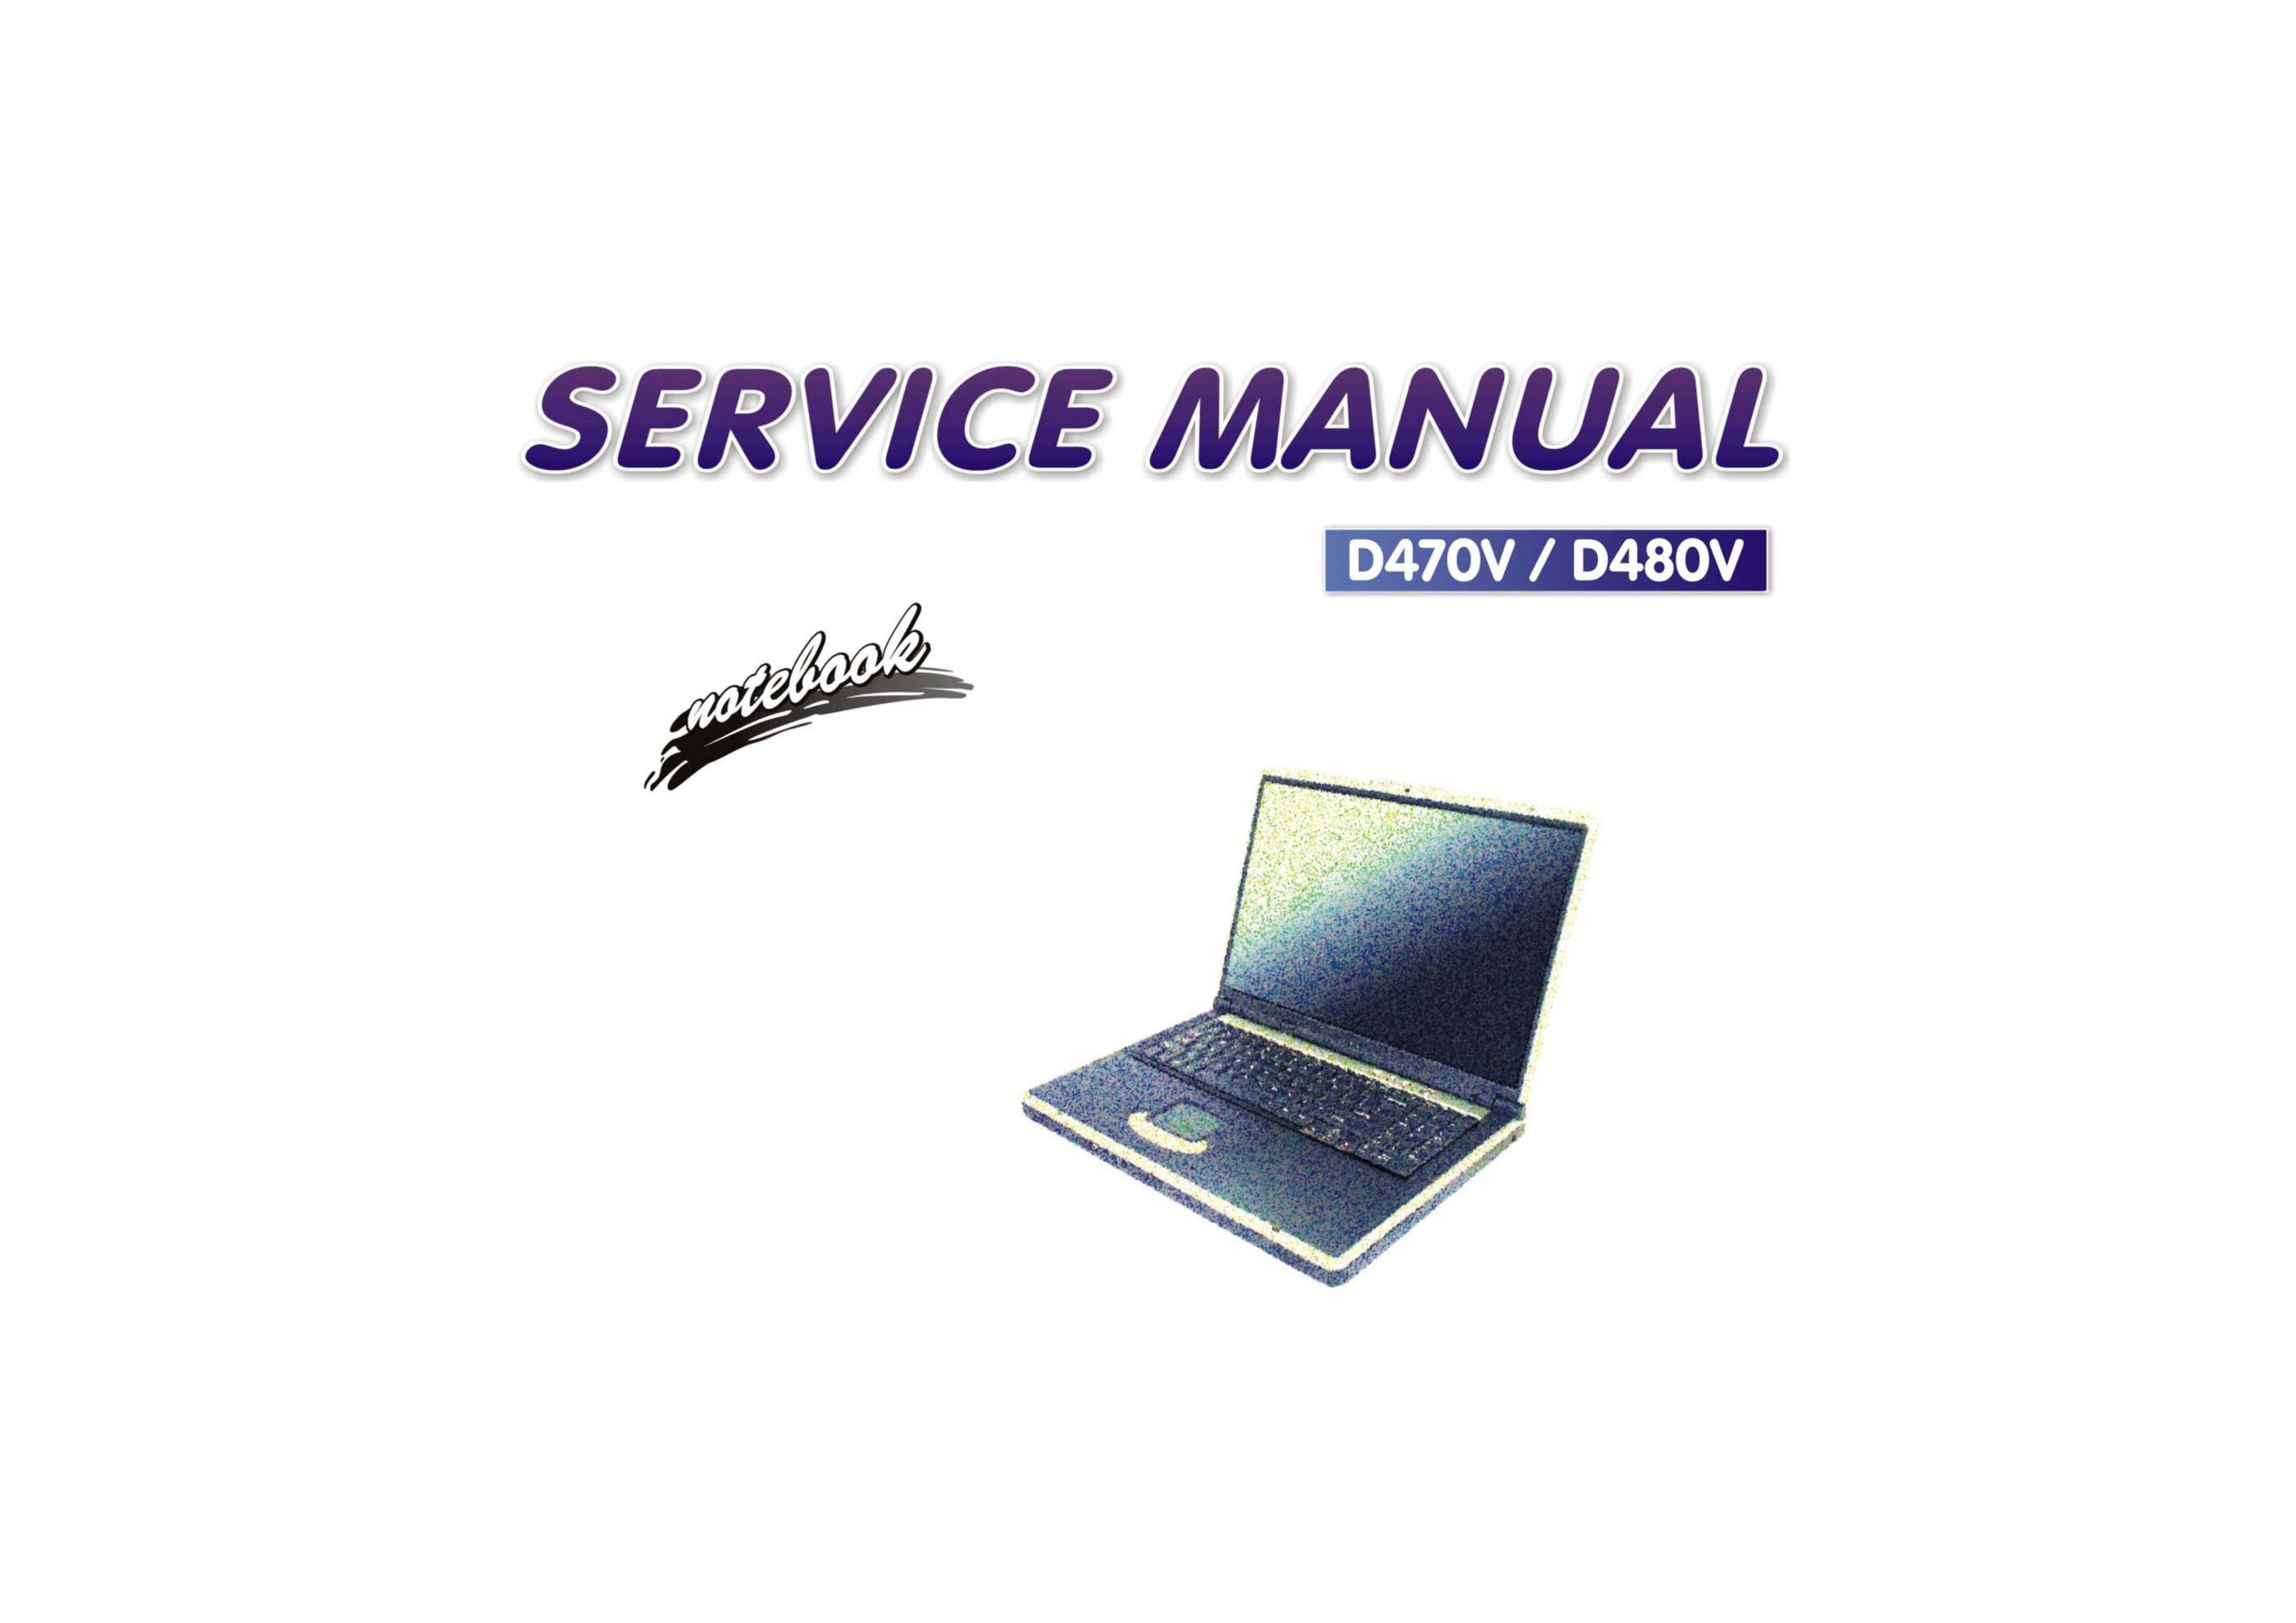 Clevo D480V Laptop User Manual